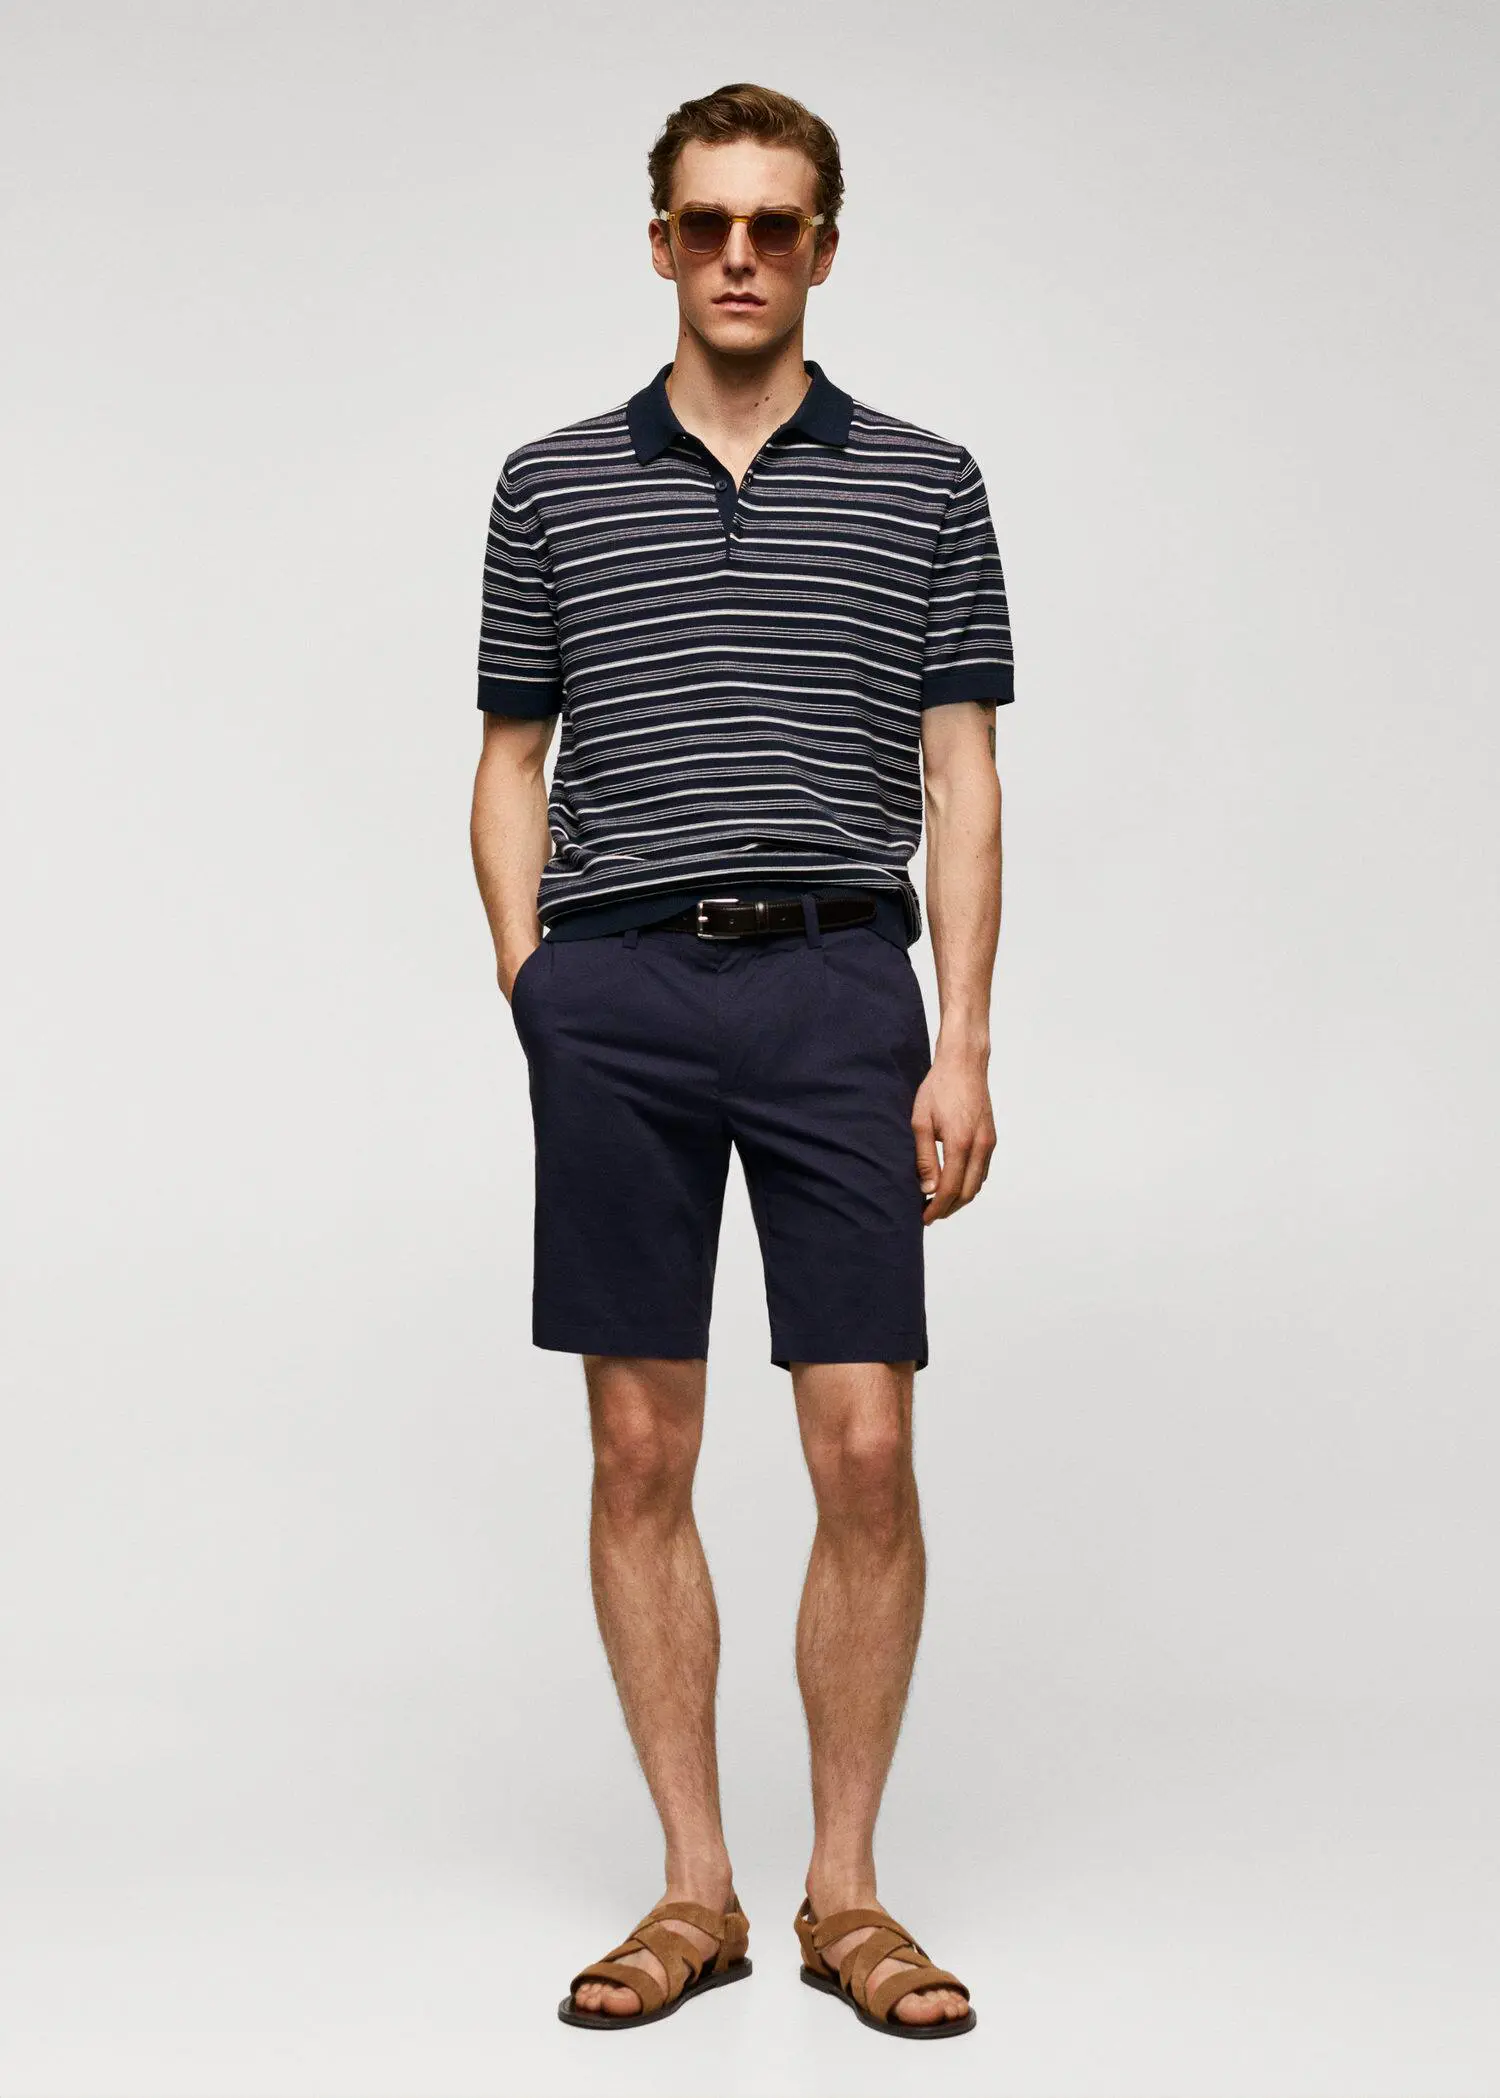 Mango Striped fine-knit polo shirt. a man in a striped polo shirt and shorts. 